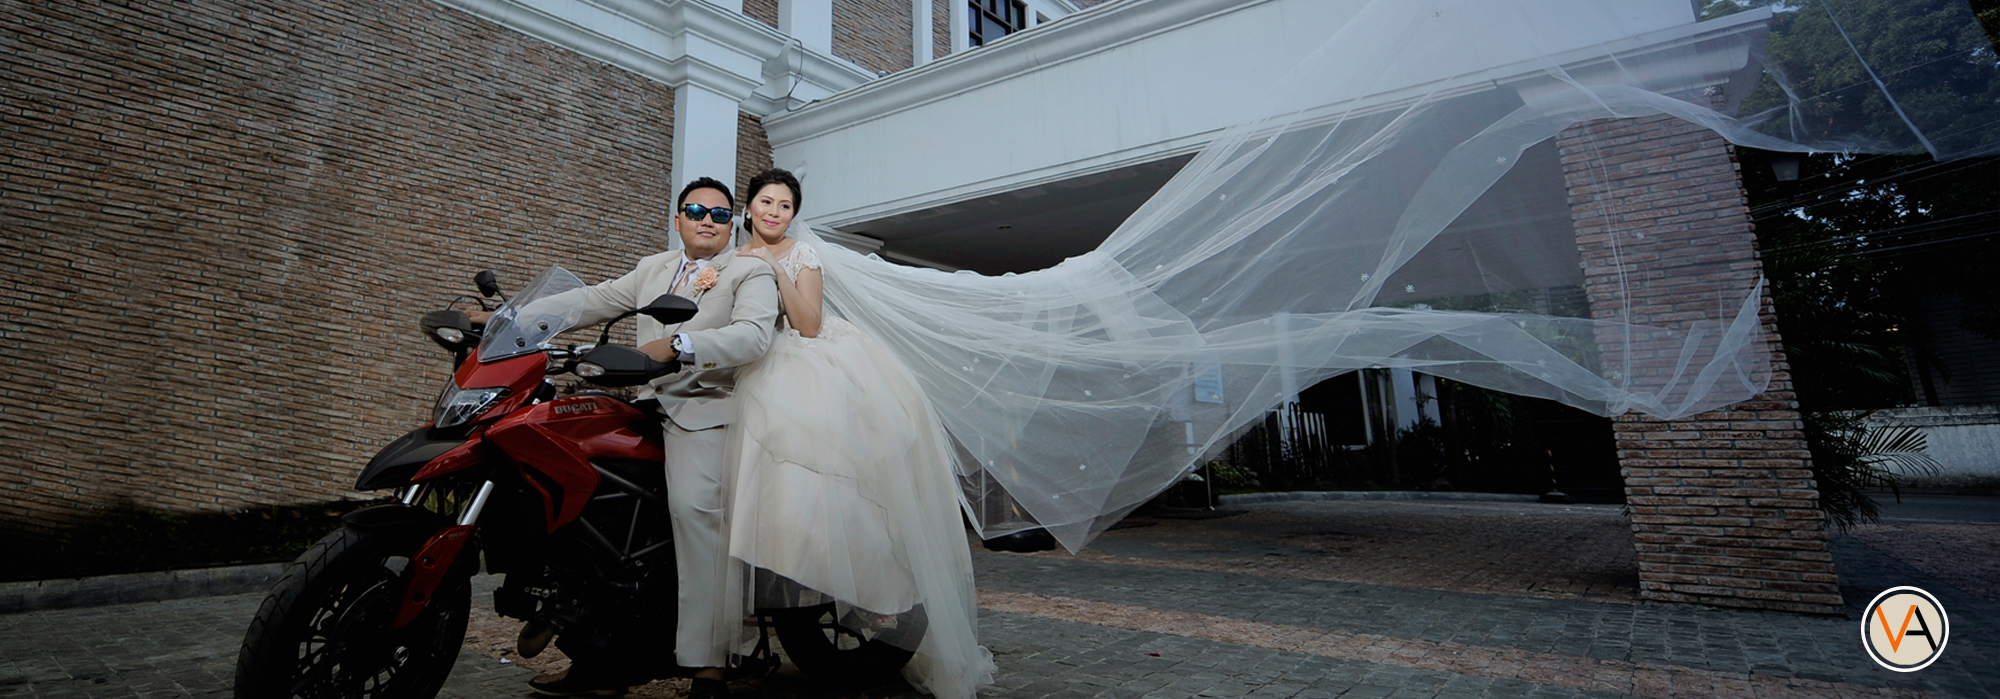 thumbs copy - VA San Diego Studio - Davao Wedding Photographer